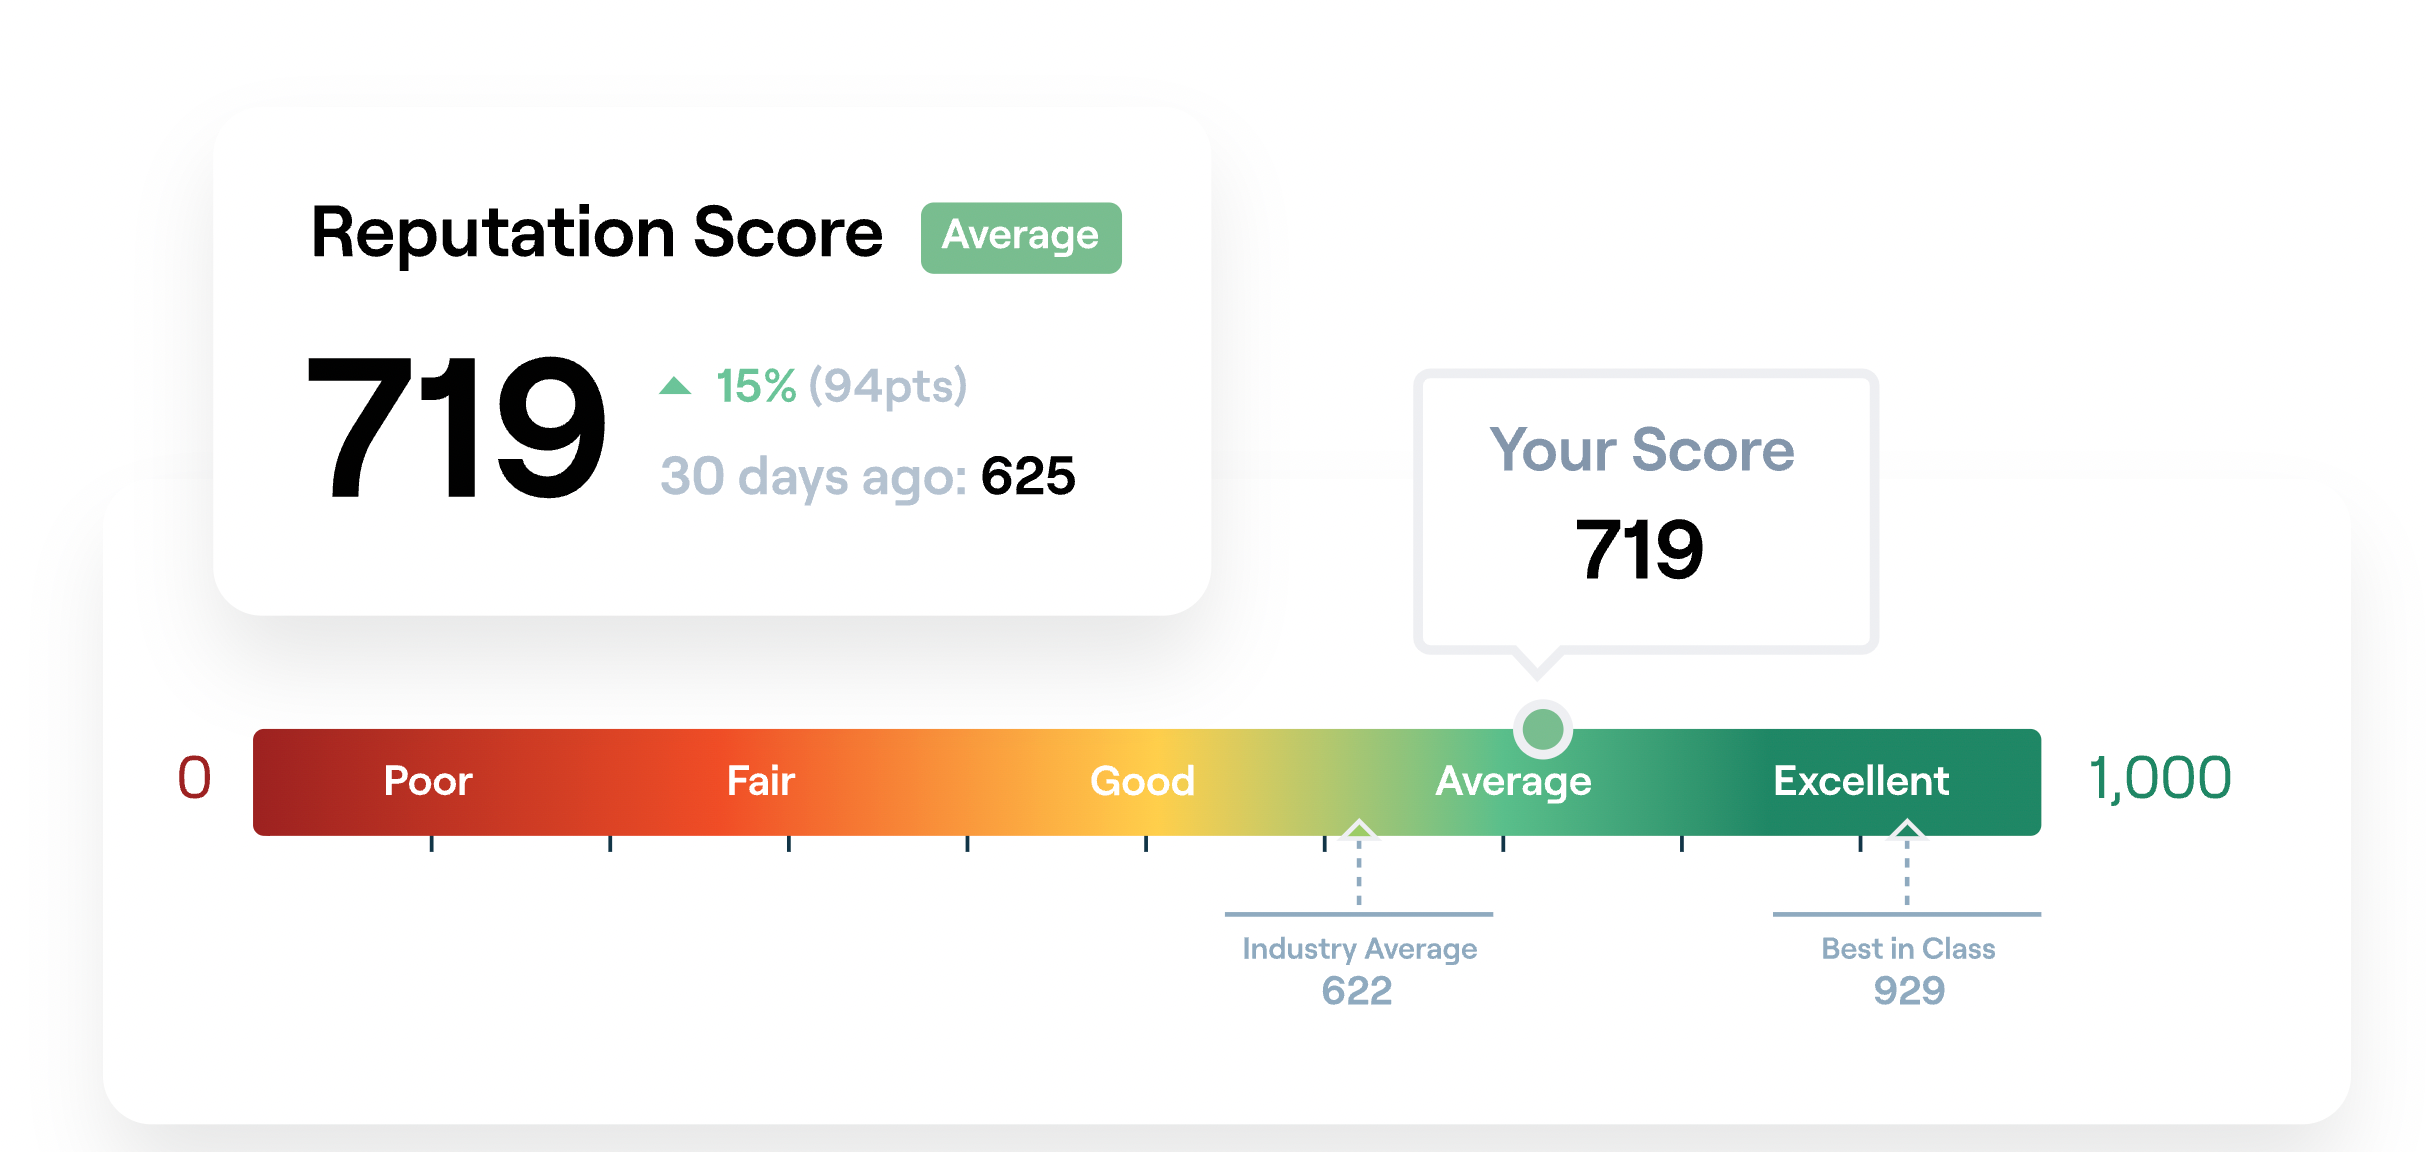 Example of good reputation score